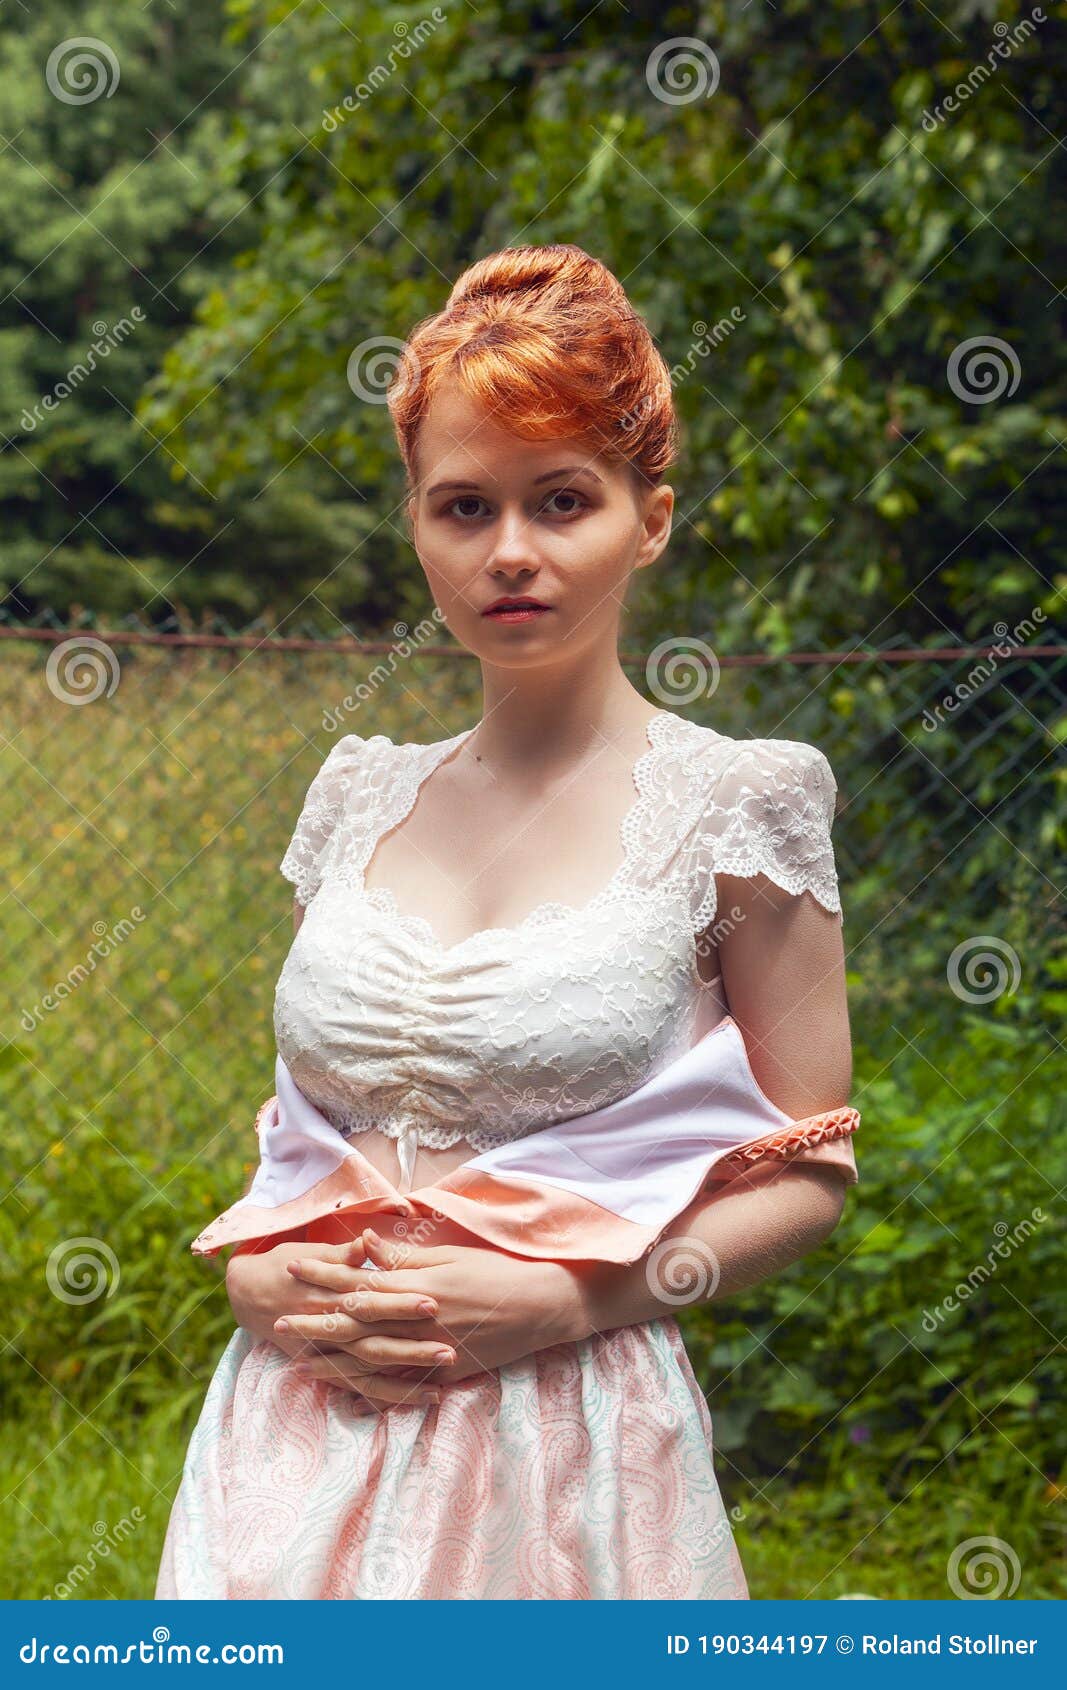 https://thumbs.dreamstime.com/z/portrait-bavarian-young-woman-dirndl-blouse-girl-reddish-plug-hairstyle-open-dress-lace-190344197.jpg